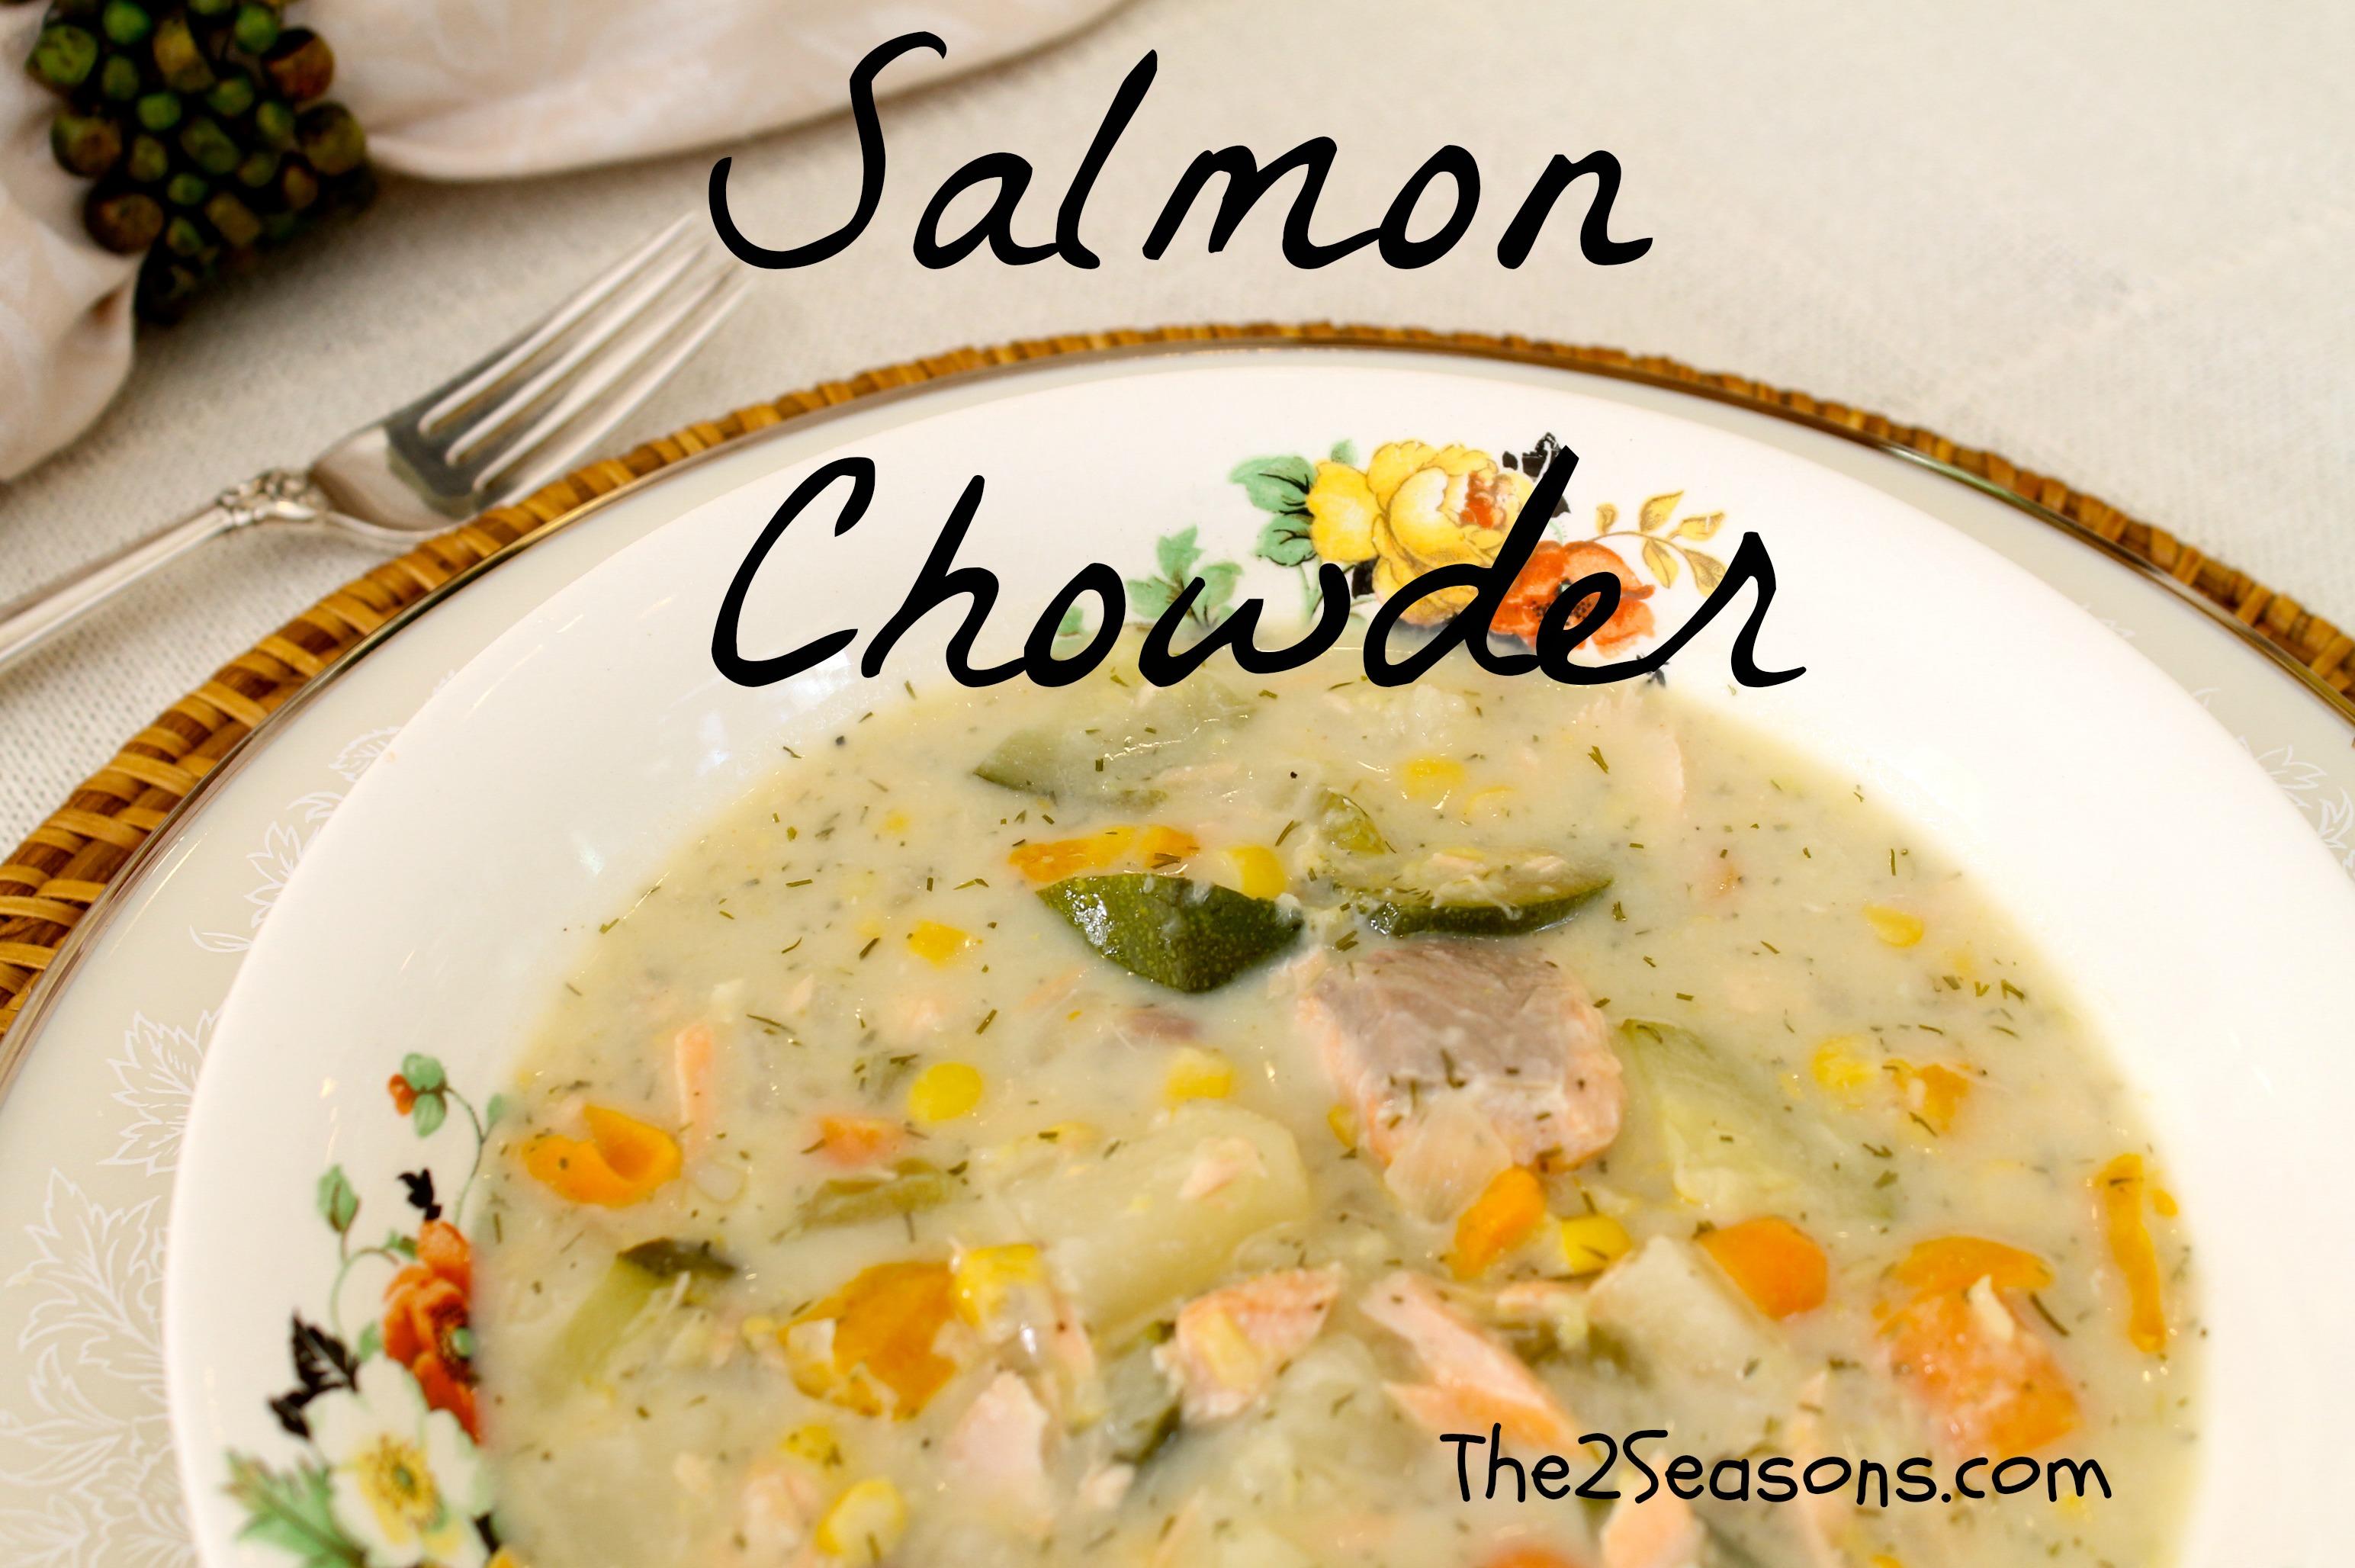 Salmon Chowder - Tzatziki Sauce